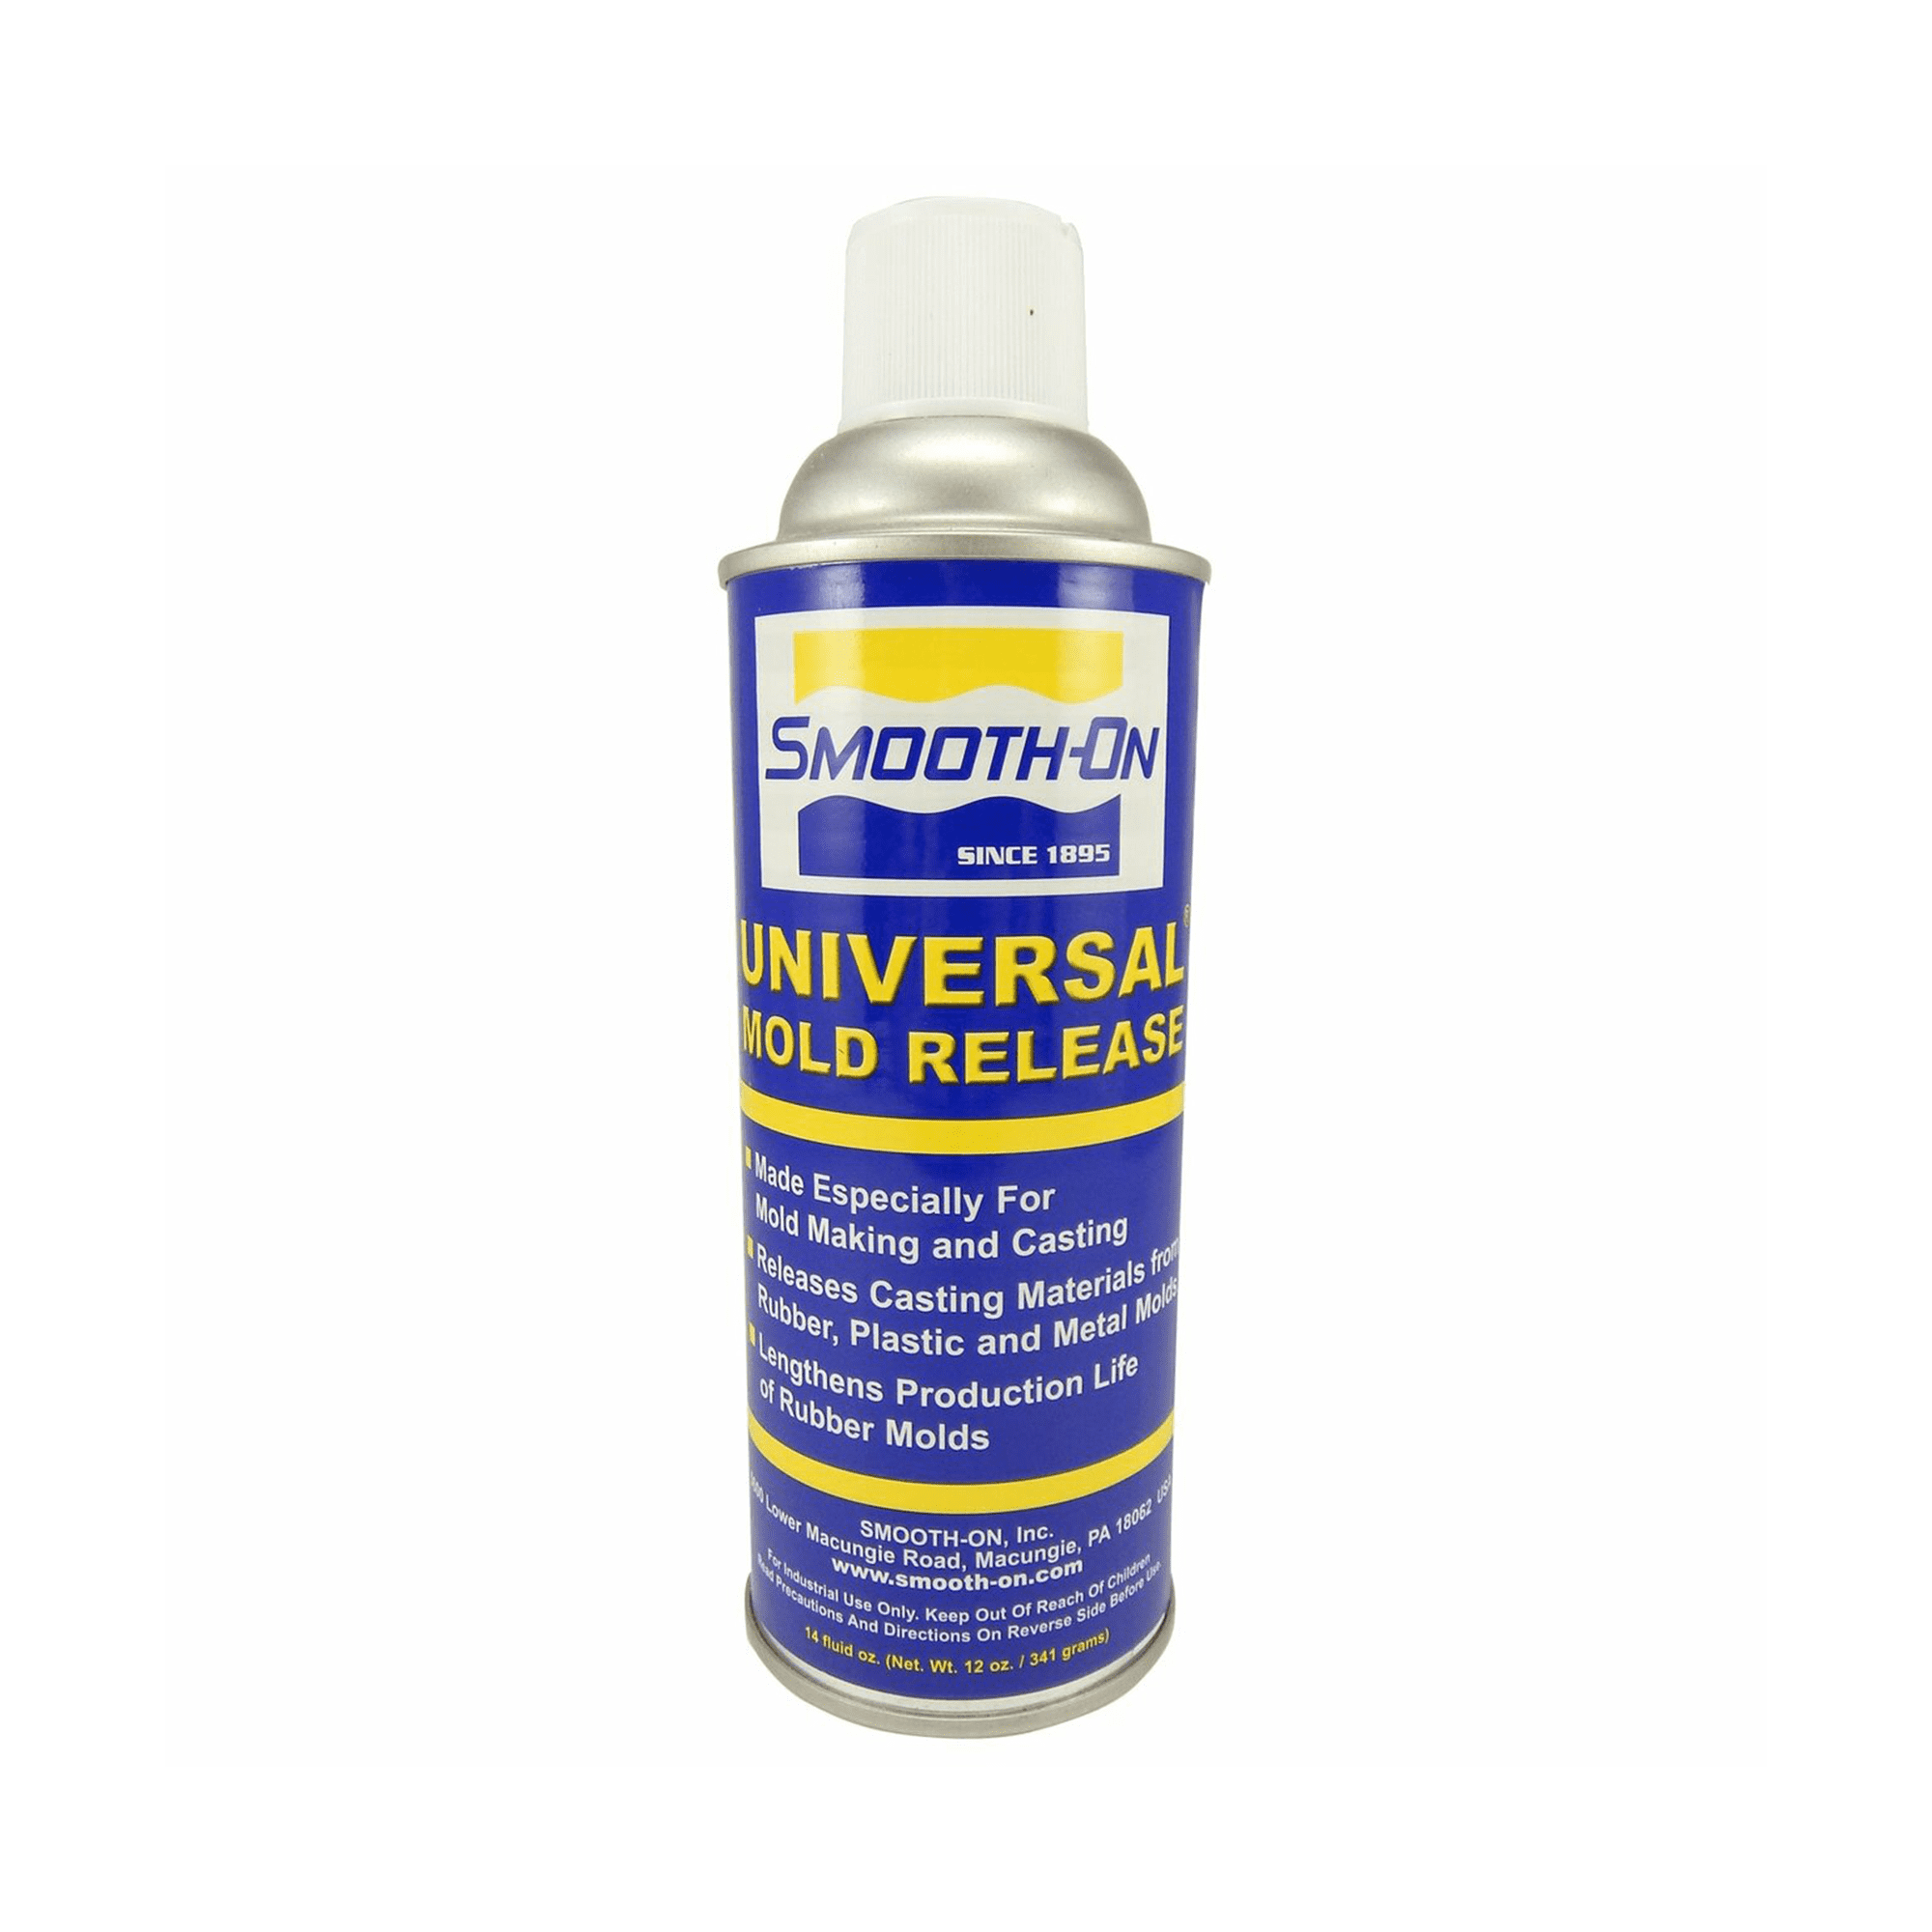 Universal Mold Release - 14 Fluid Ounce Aerosol Can